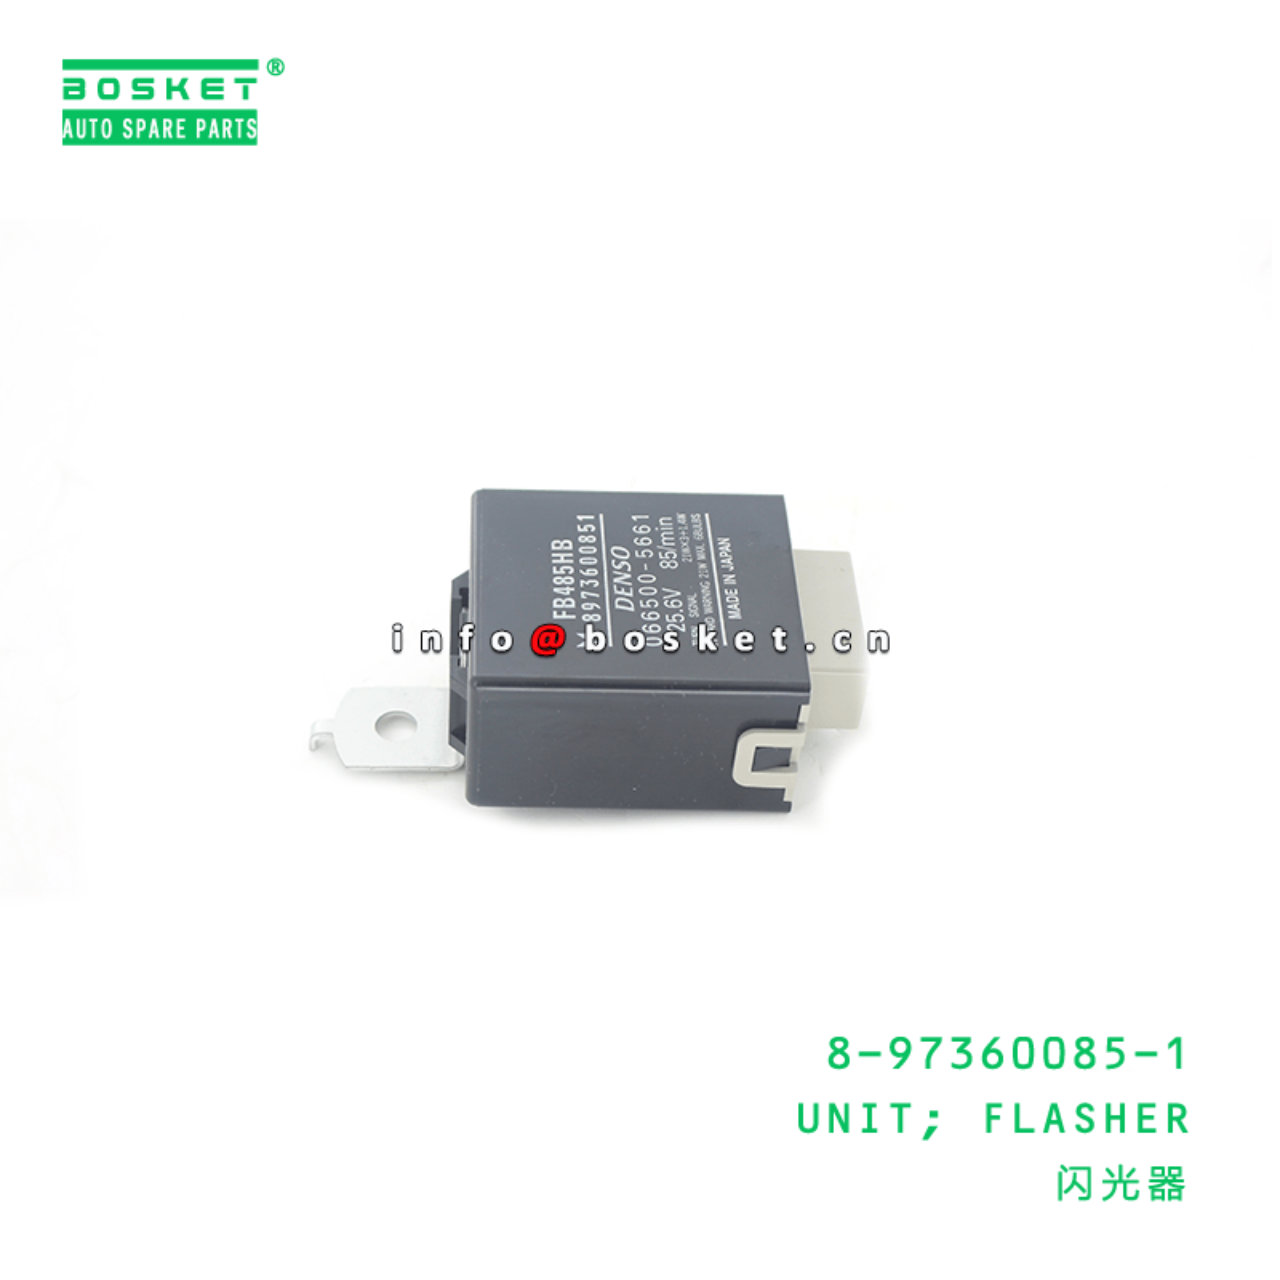 8-97360085-1 Flasher Unit 8973600851 Suitable for ISUZU NPR